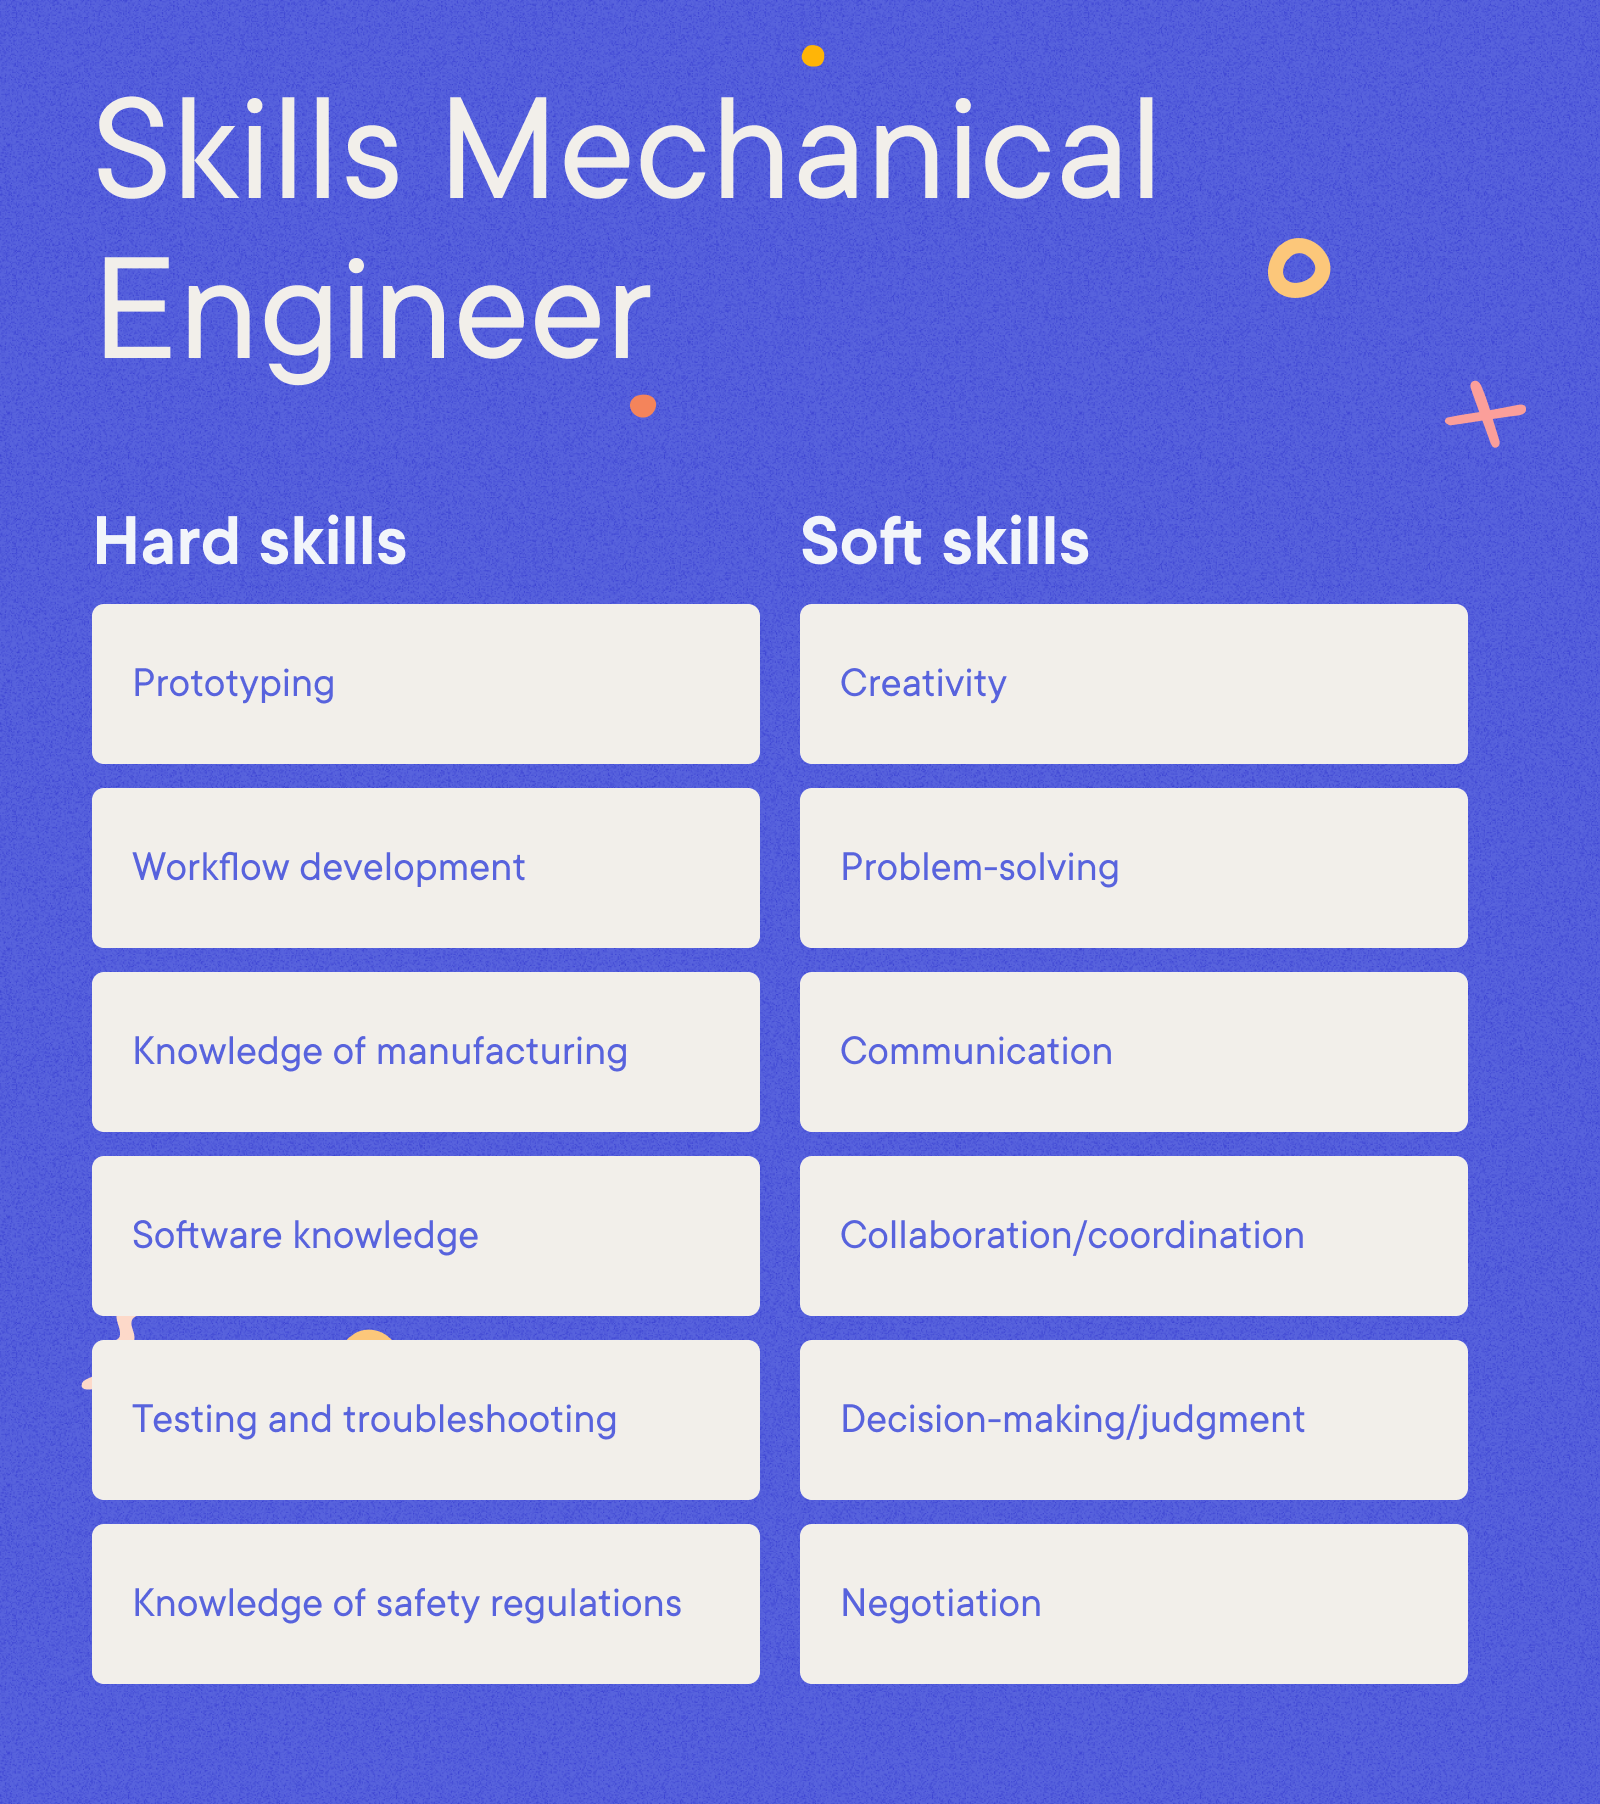 Mechanical Engineer Resume Example - Skills Mechanical Engineer